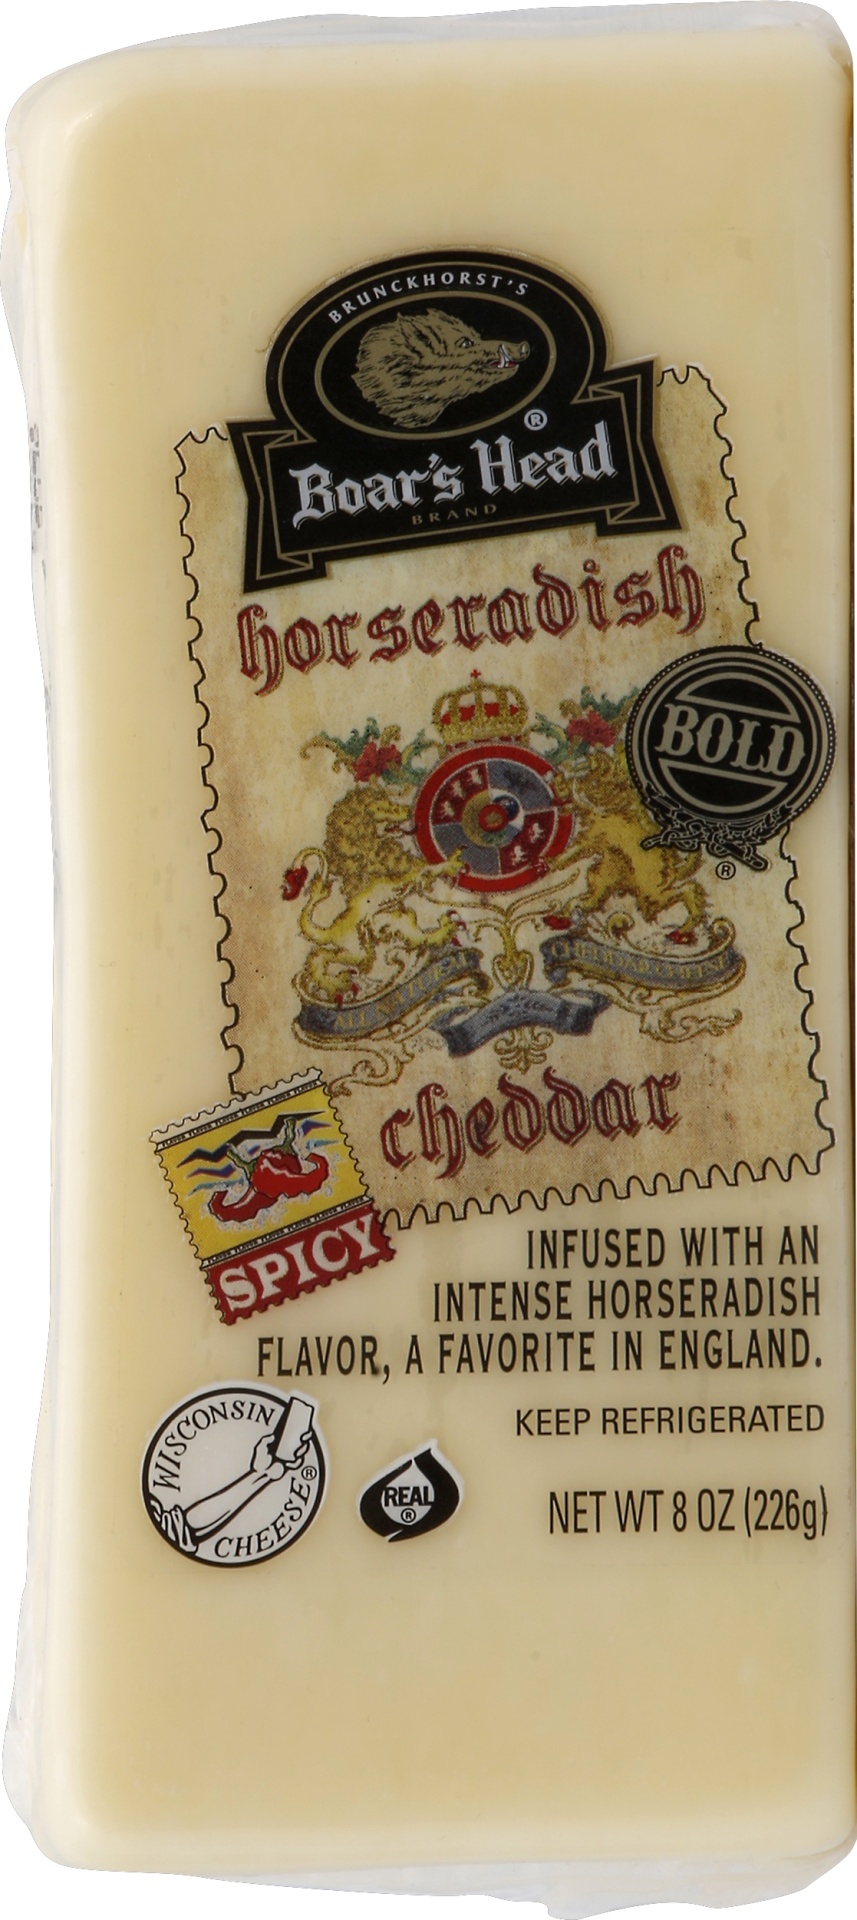 slide 1 of 2, Boar's Head Cheese, Cheddar, Horseradish, Spicy & Bold, 1 ct